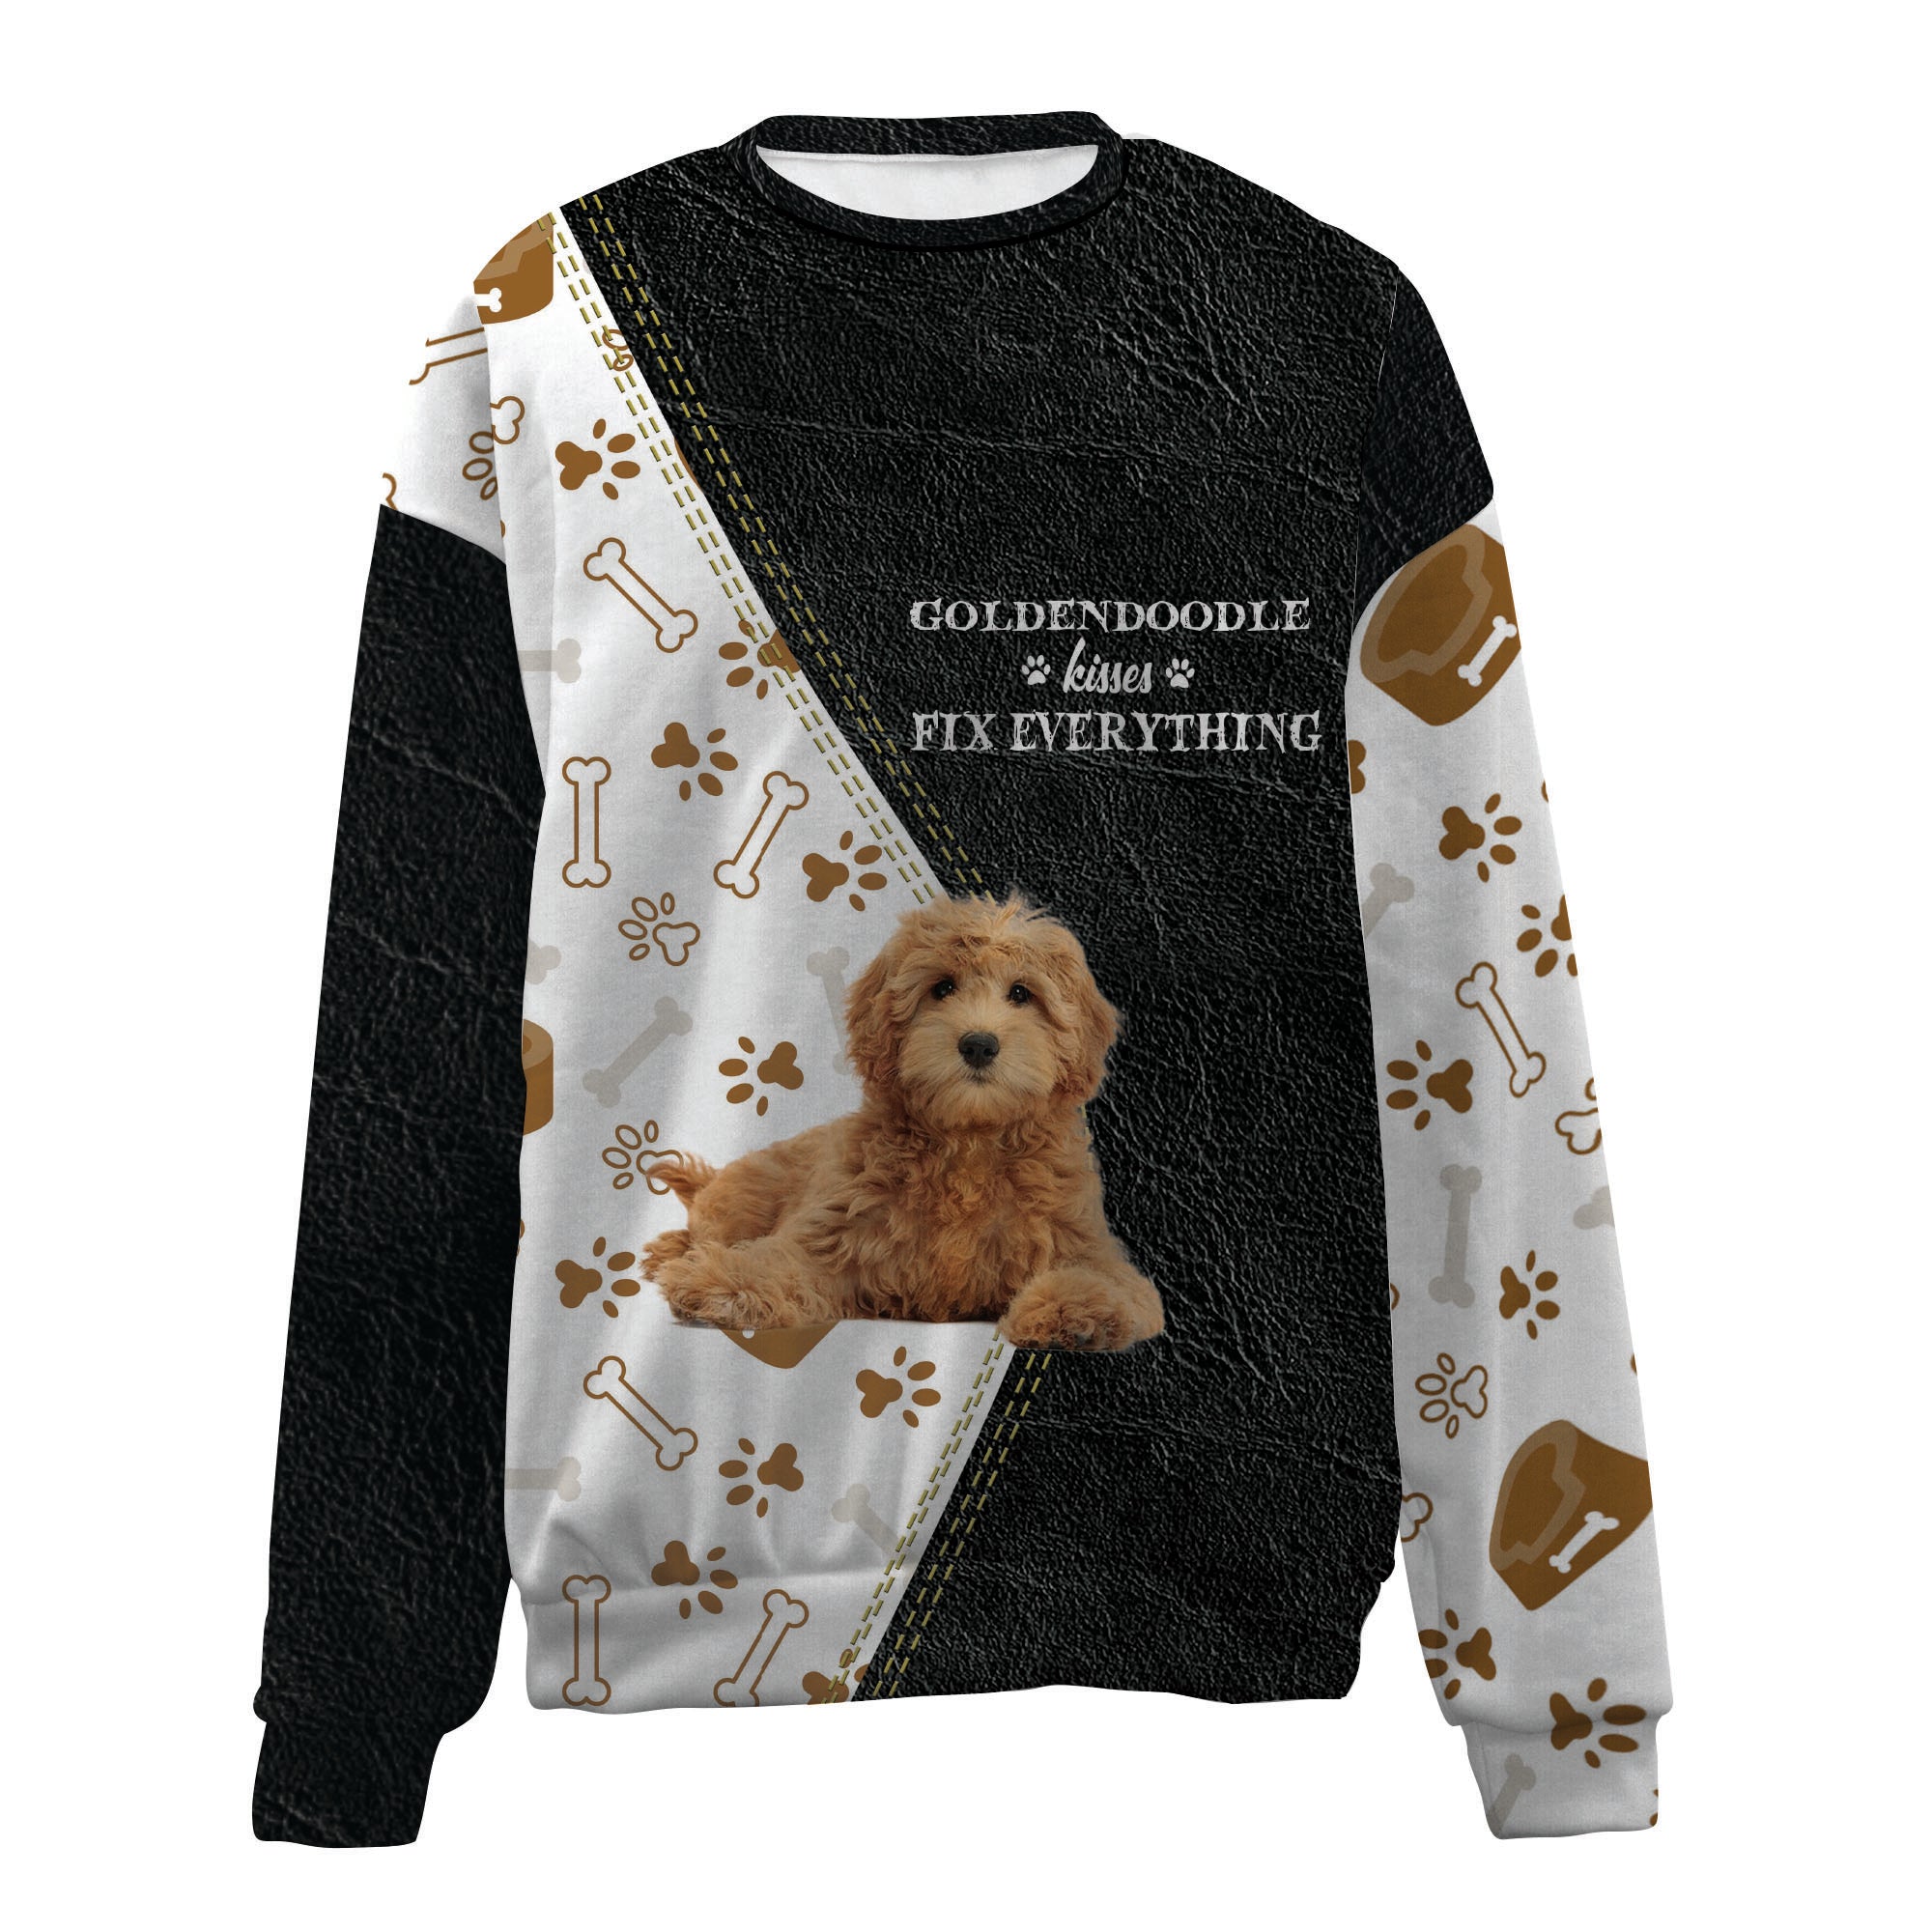 Goldendoodle-Fix Everything-Premium Sweater